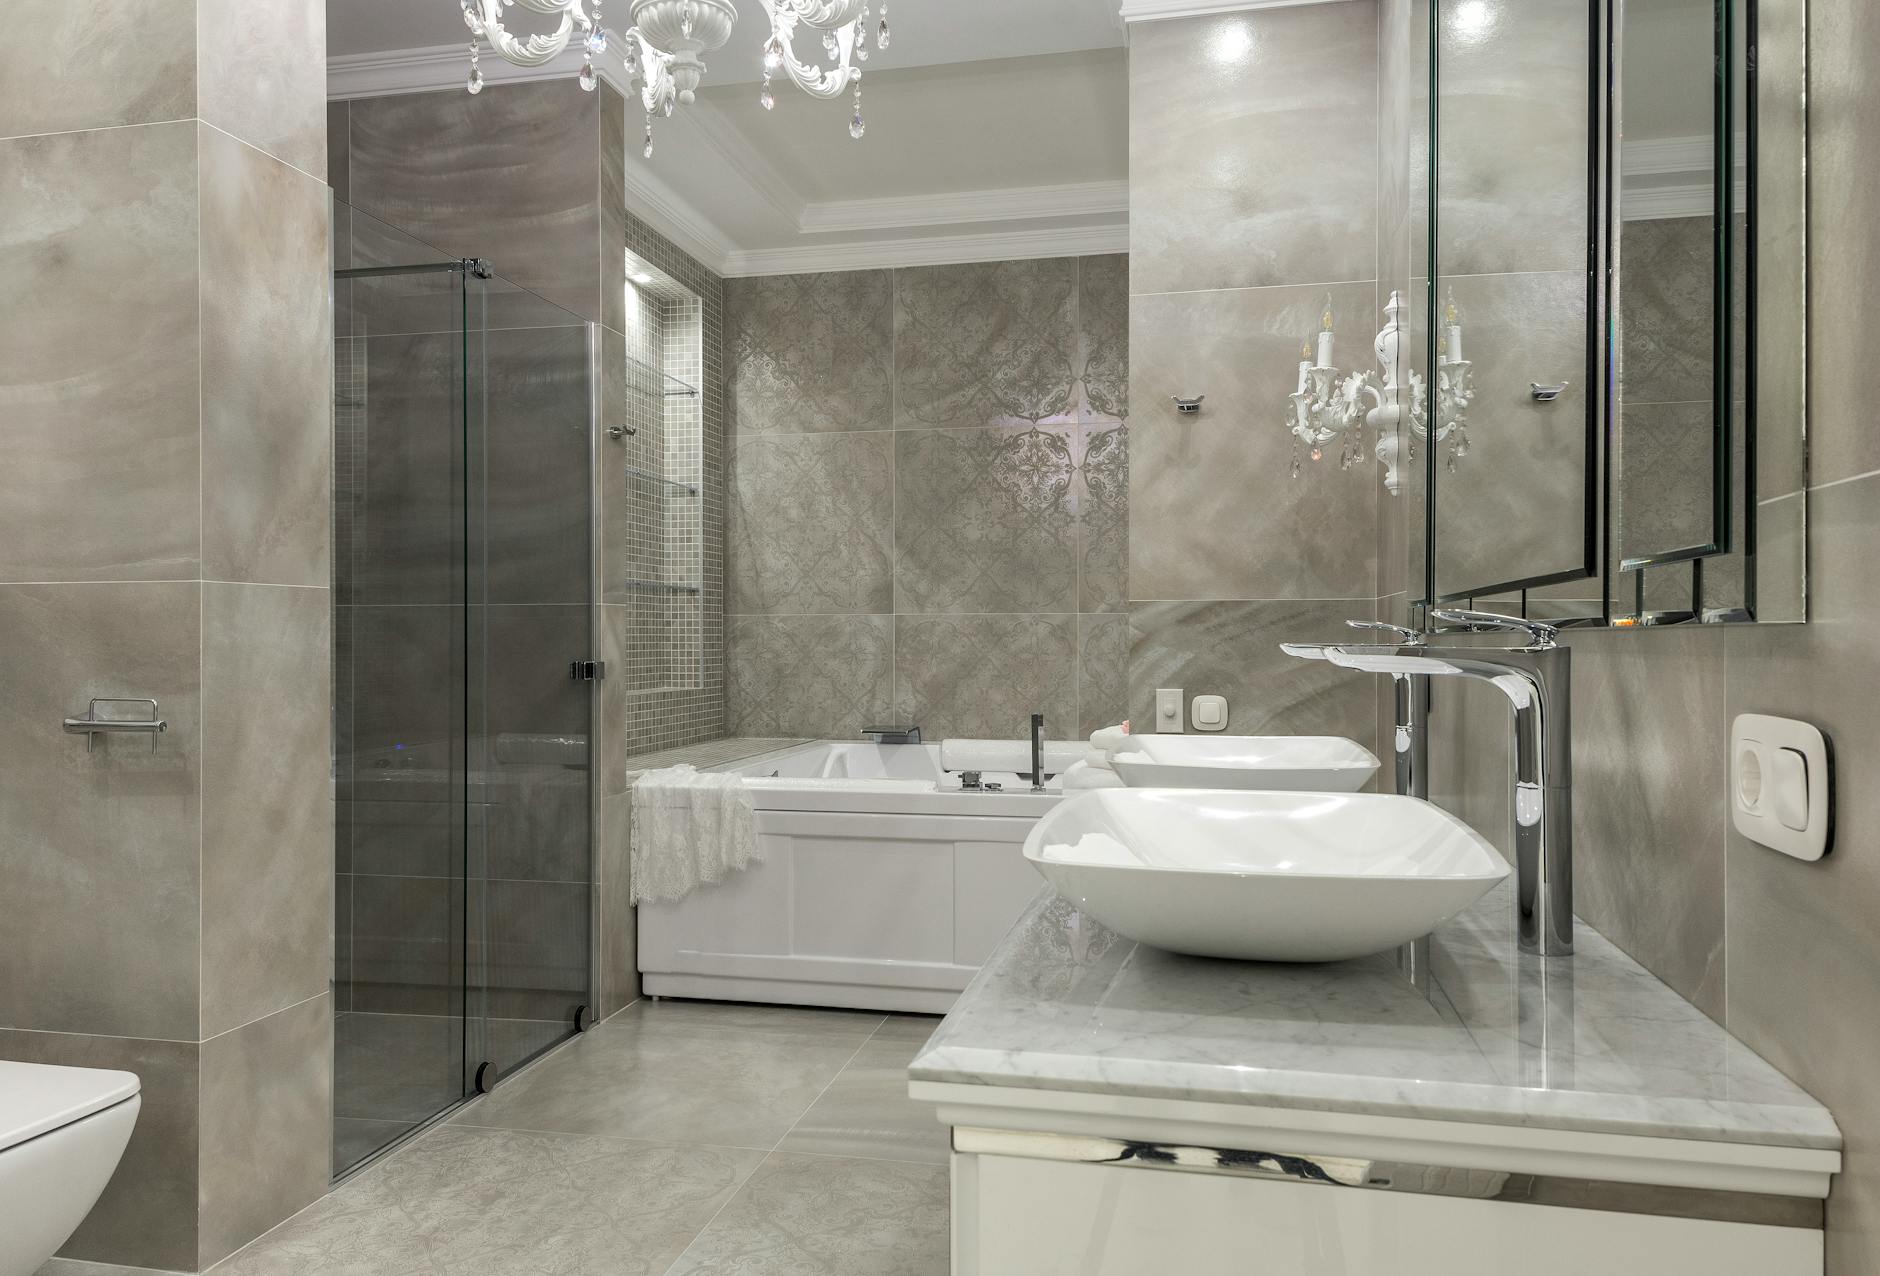 5 Top Tips for Choosing Bathroom Tiles